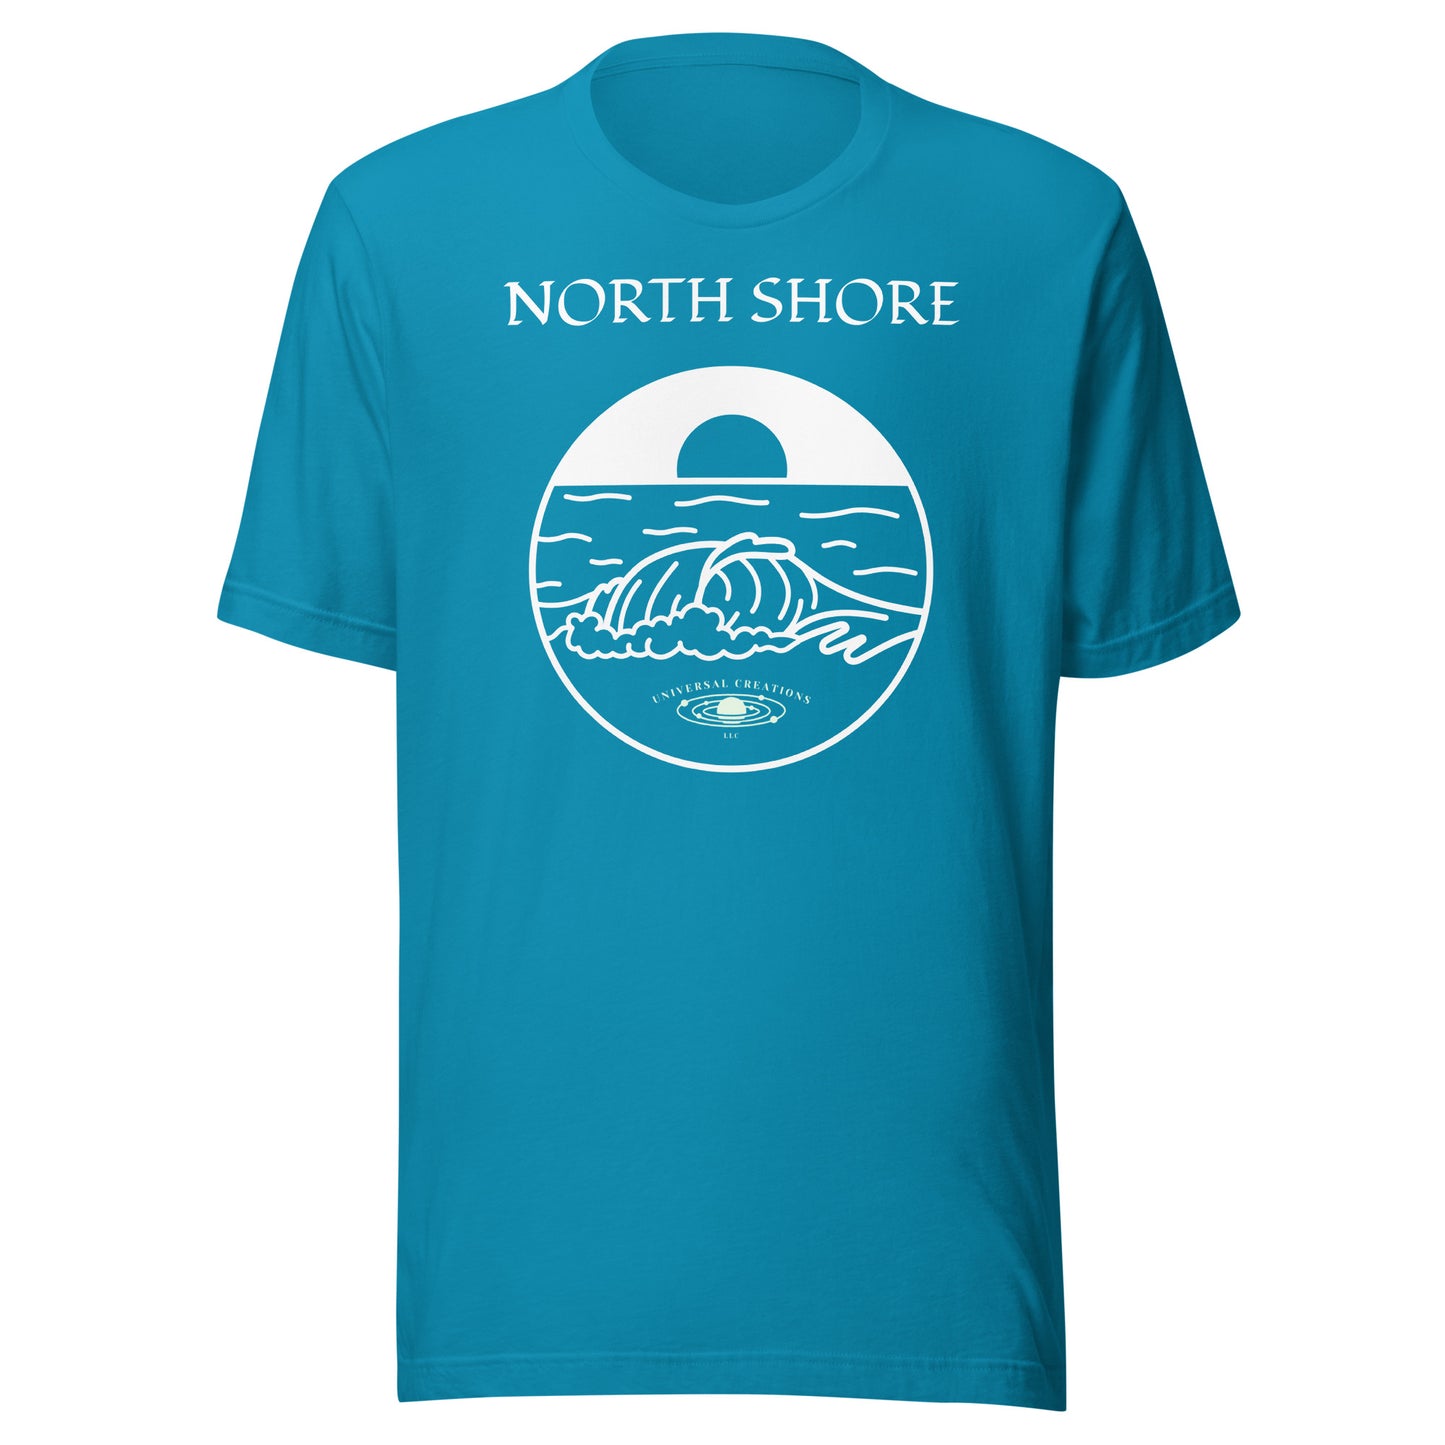 North shore- wave t-shirt